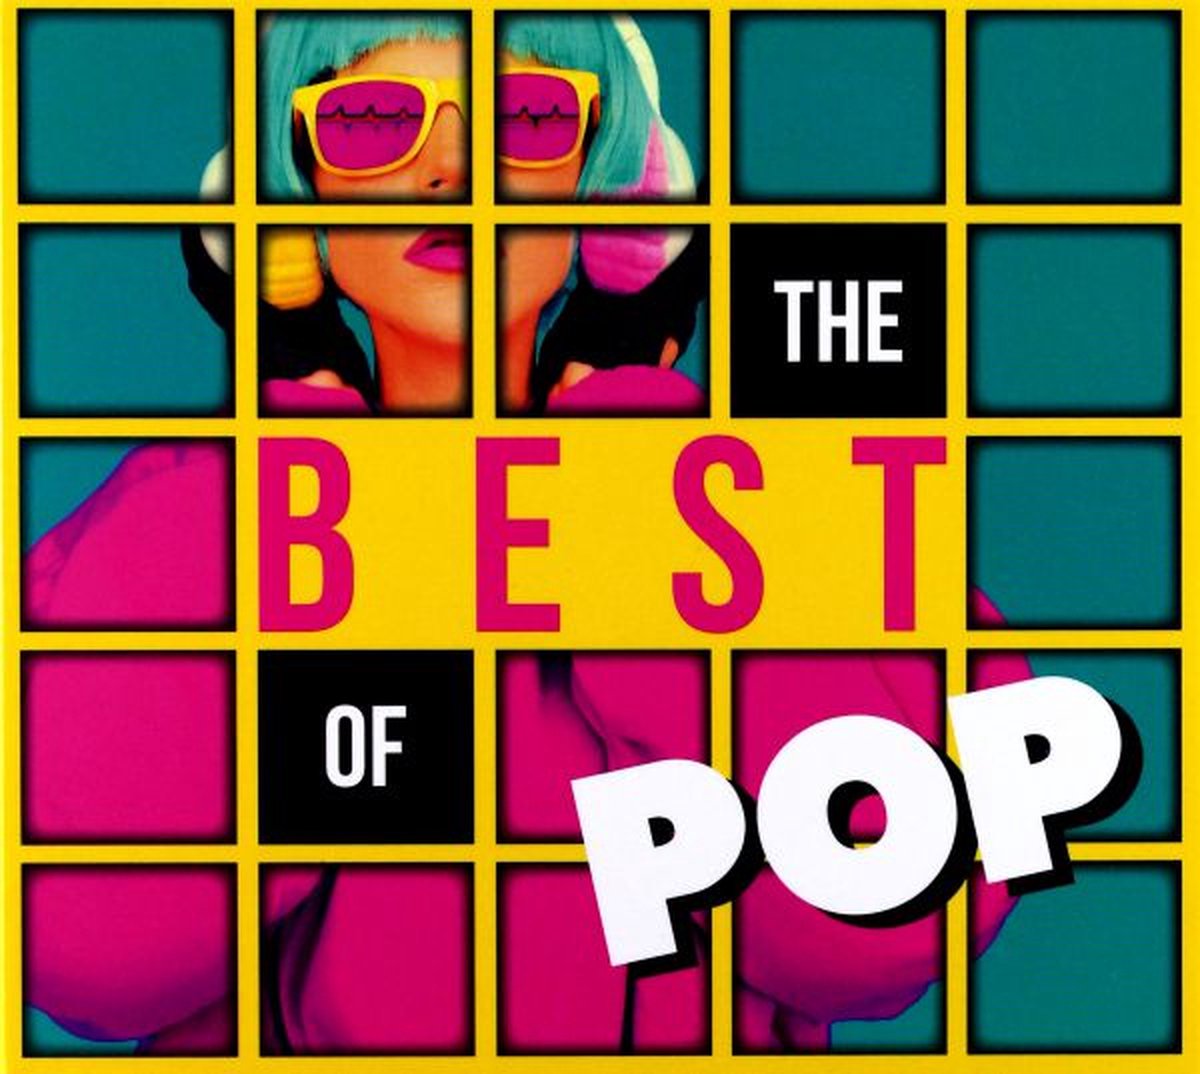 The best of pop [2CD] - Kiesza